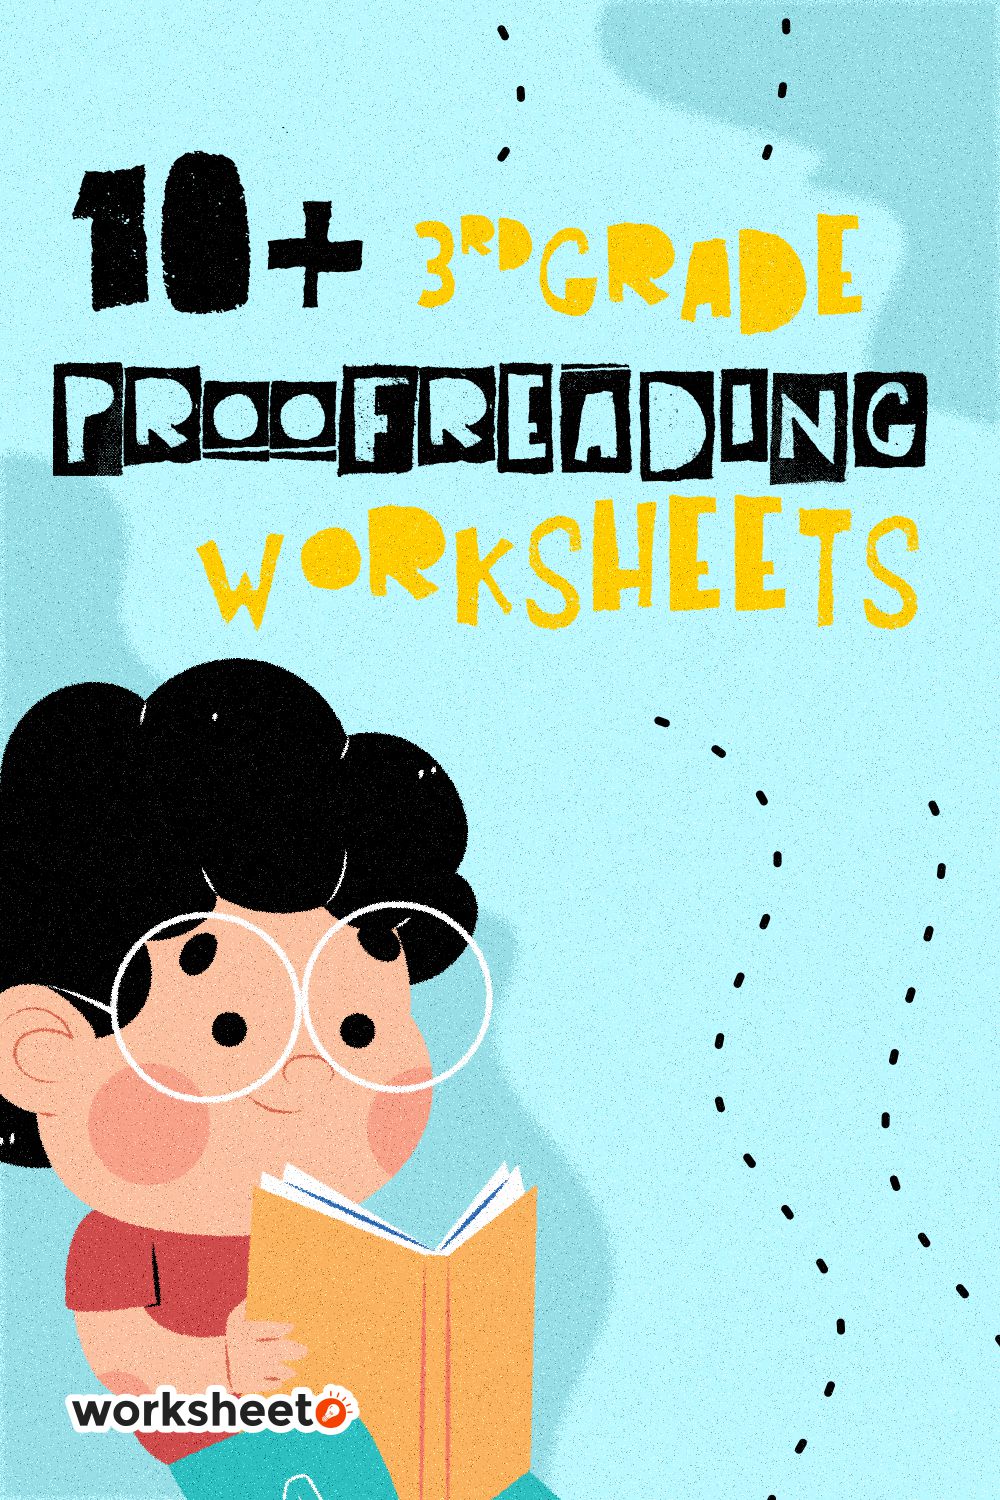 16 Images of 3rd Grade Proofreading Worksheets